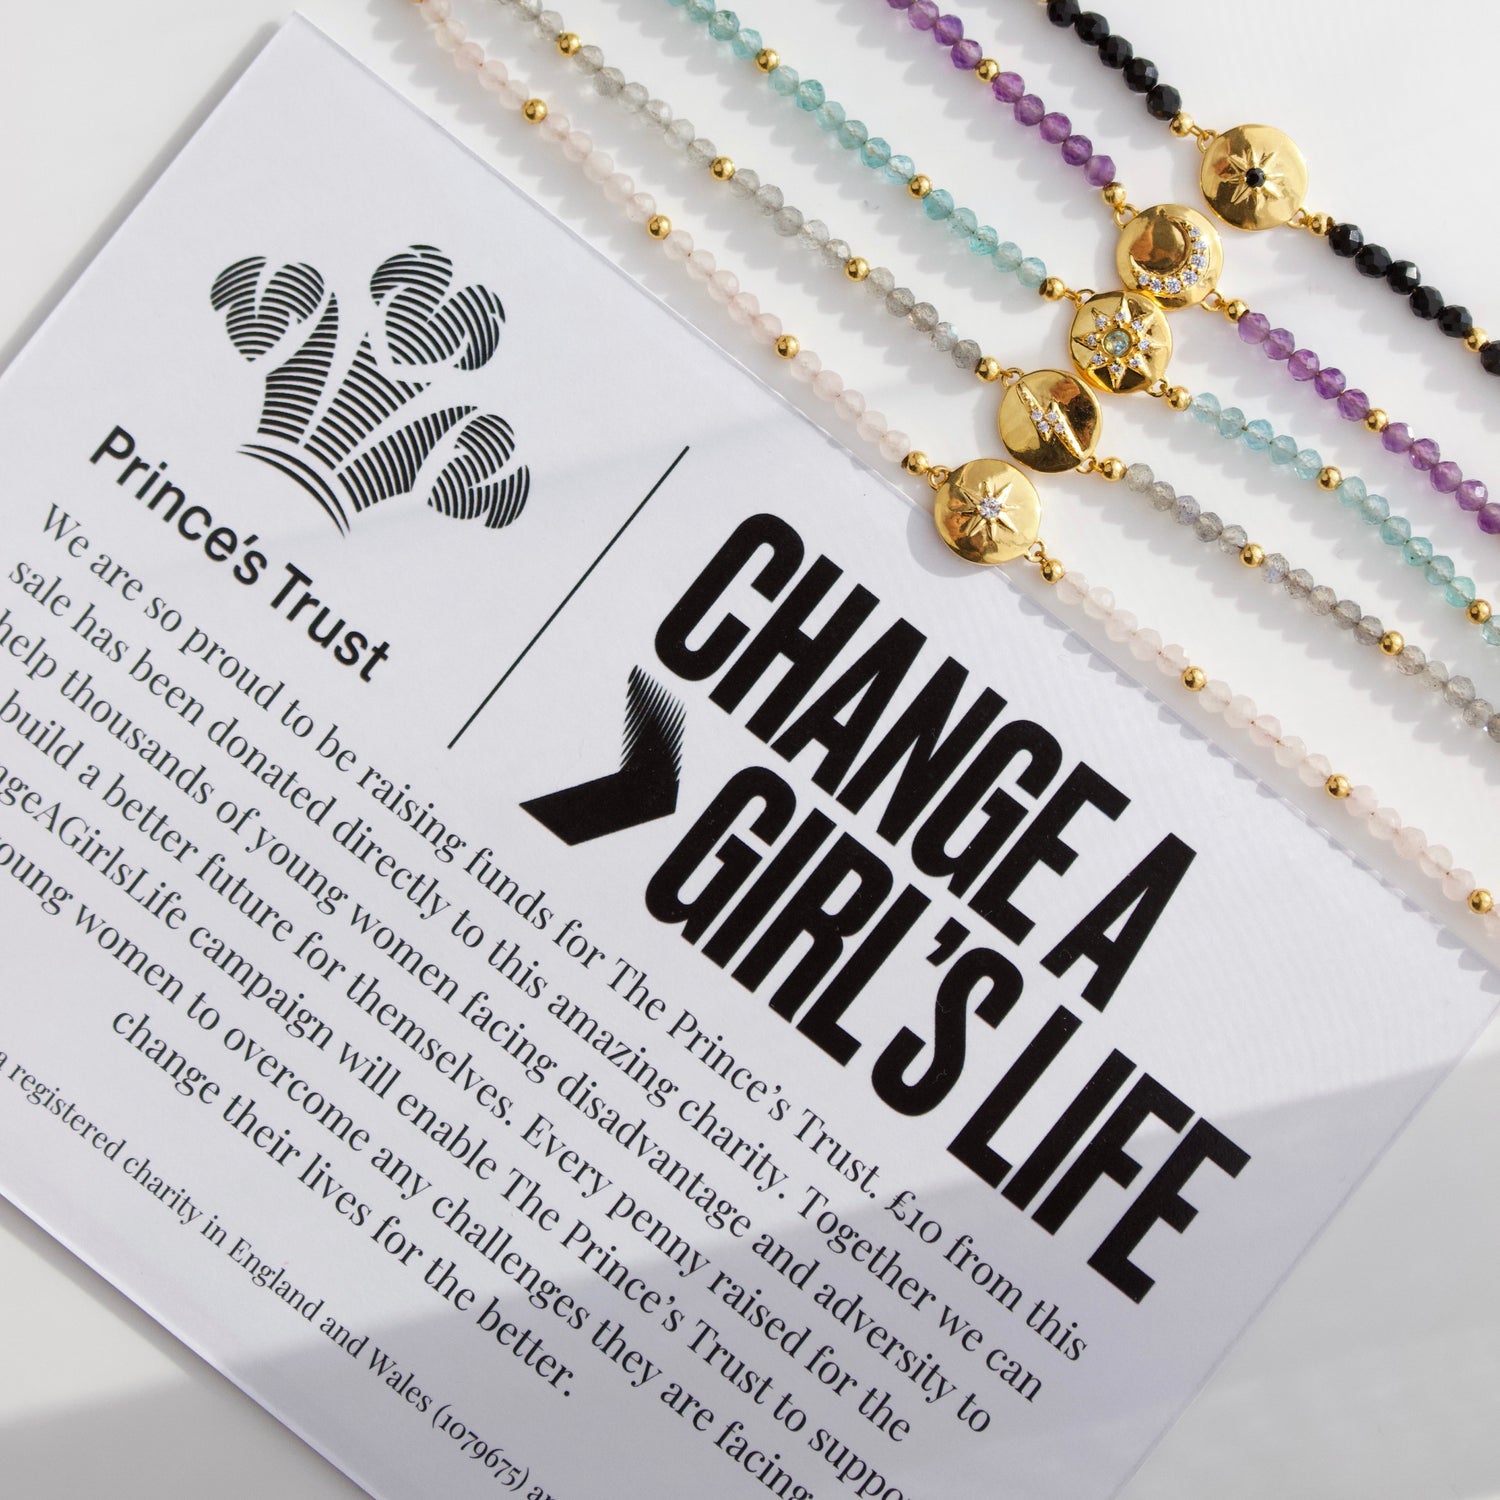 Carrie elizabeth manifestation charity princes trust onyx bracelet